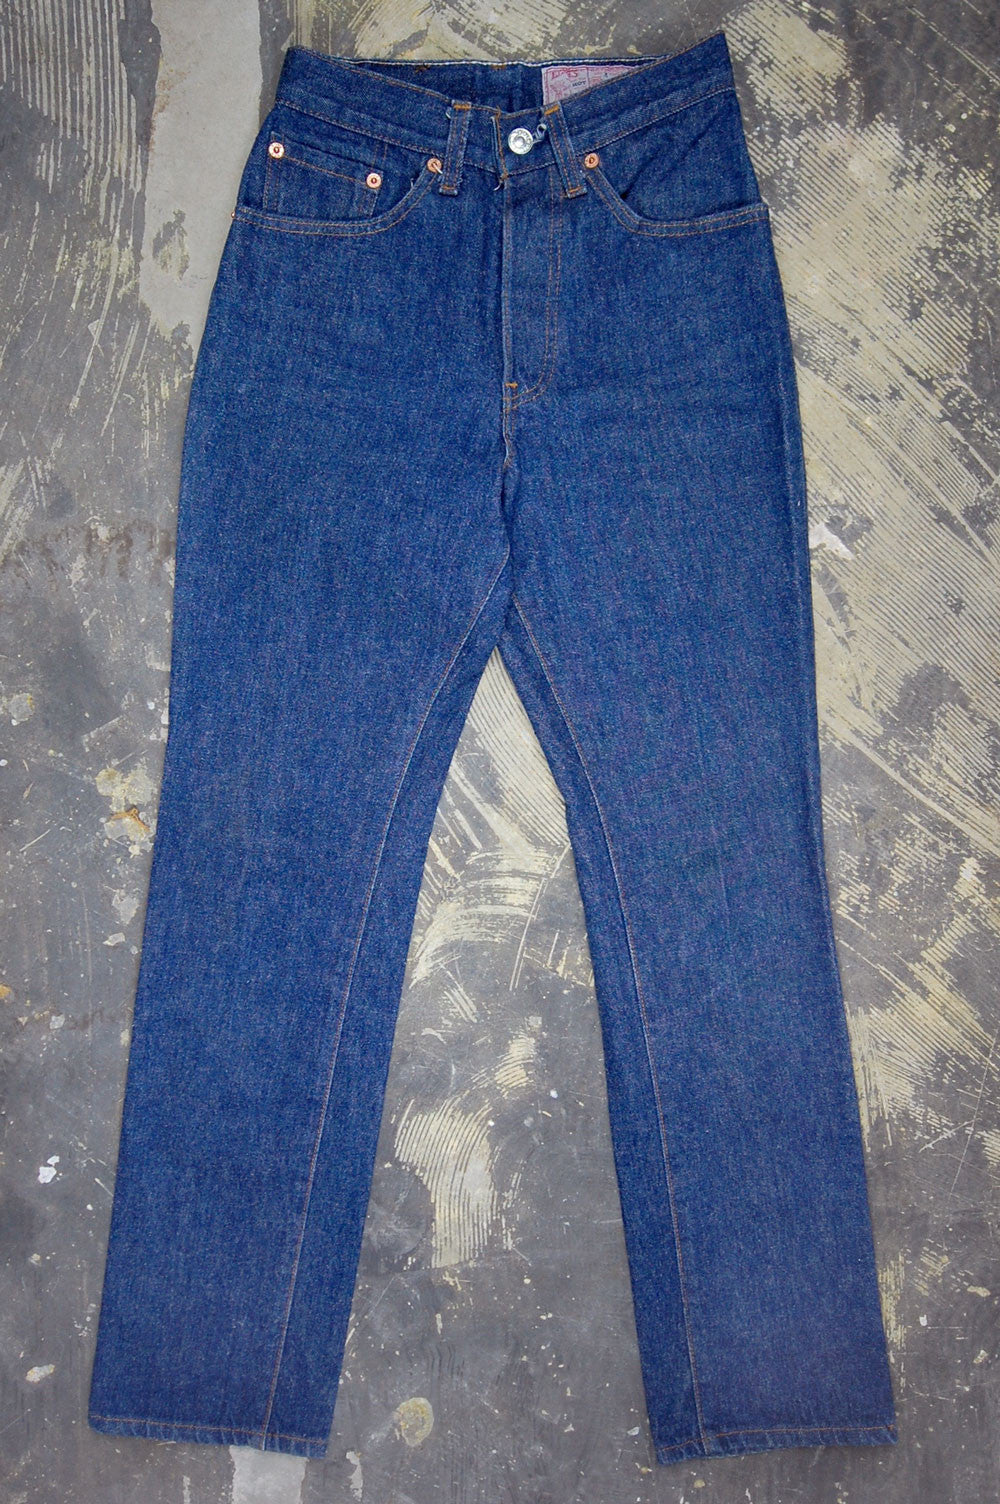 Vintage Levi's 501 Denim Jeans 26501 (JYJ-038)